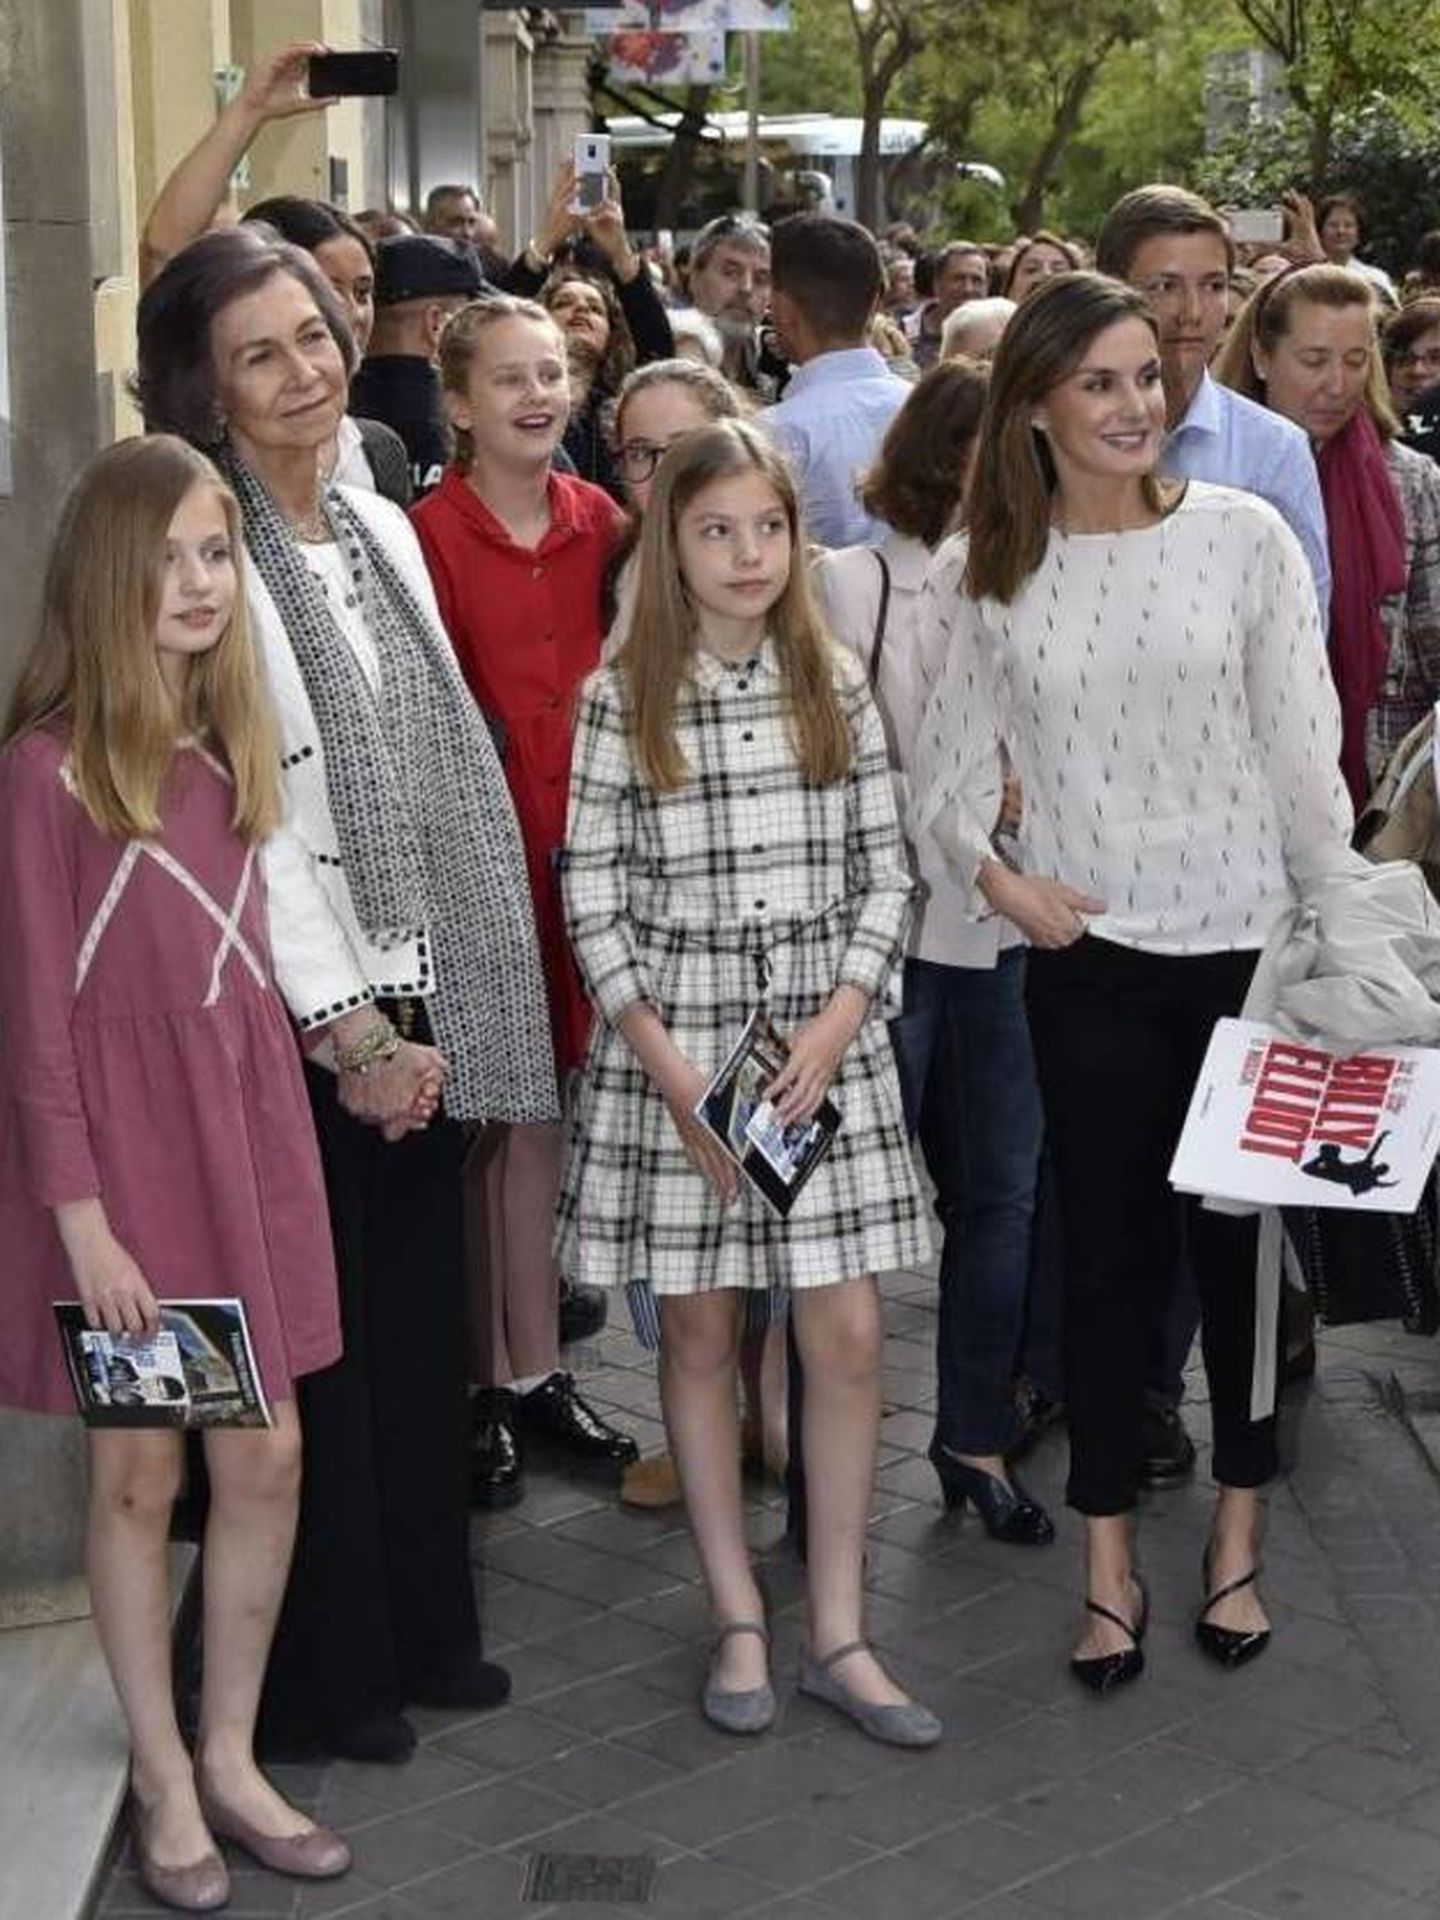 La reina Sofía con sus nietas: Leonor, Sofía e Irene (de rojo) y la reina Letizia. (Cordon Press)